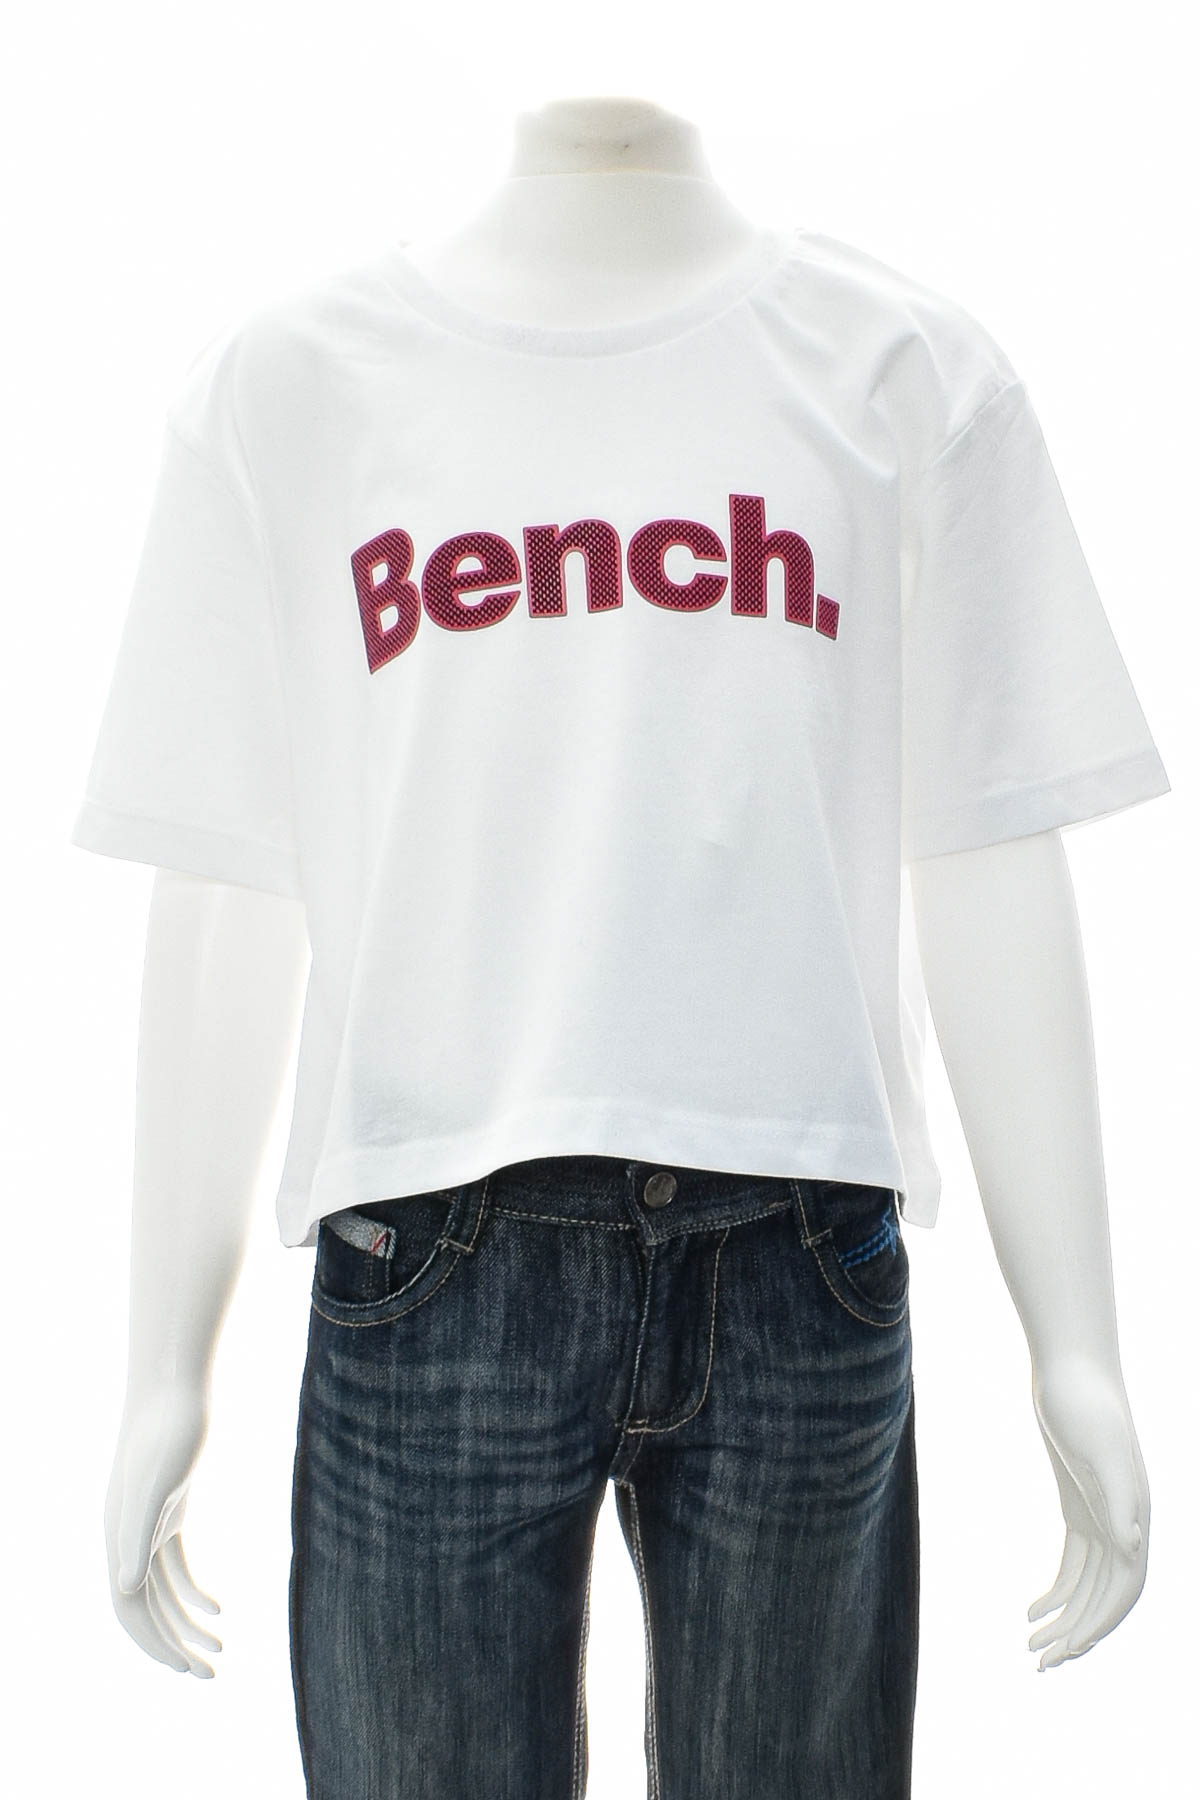 Girls' t-shirt - Bench. - 0